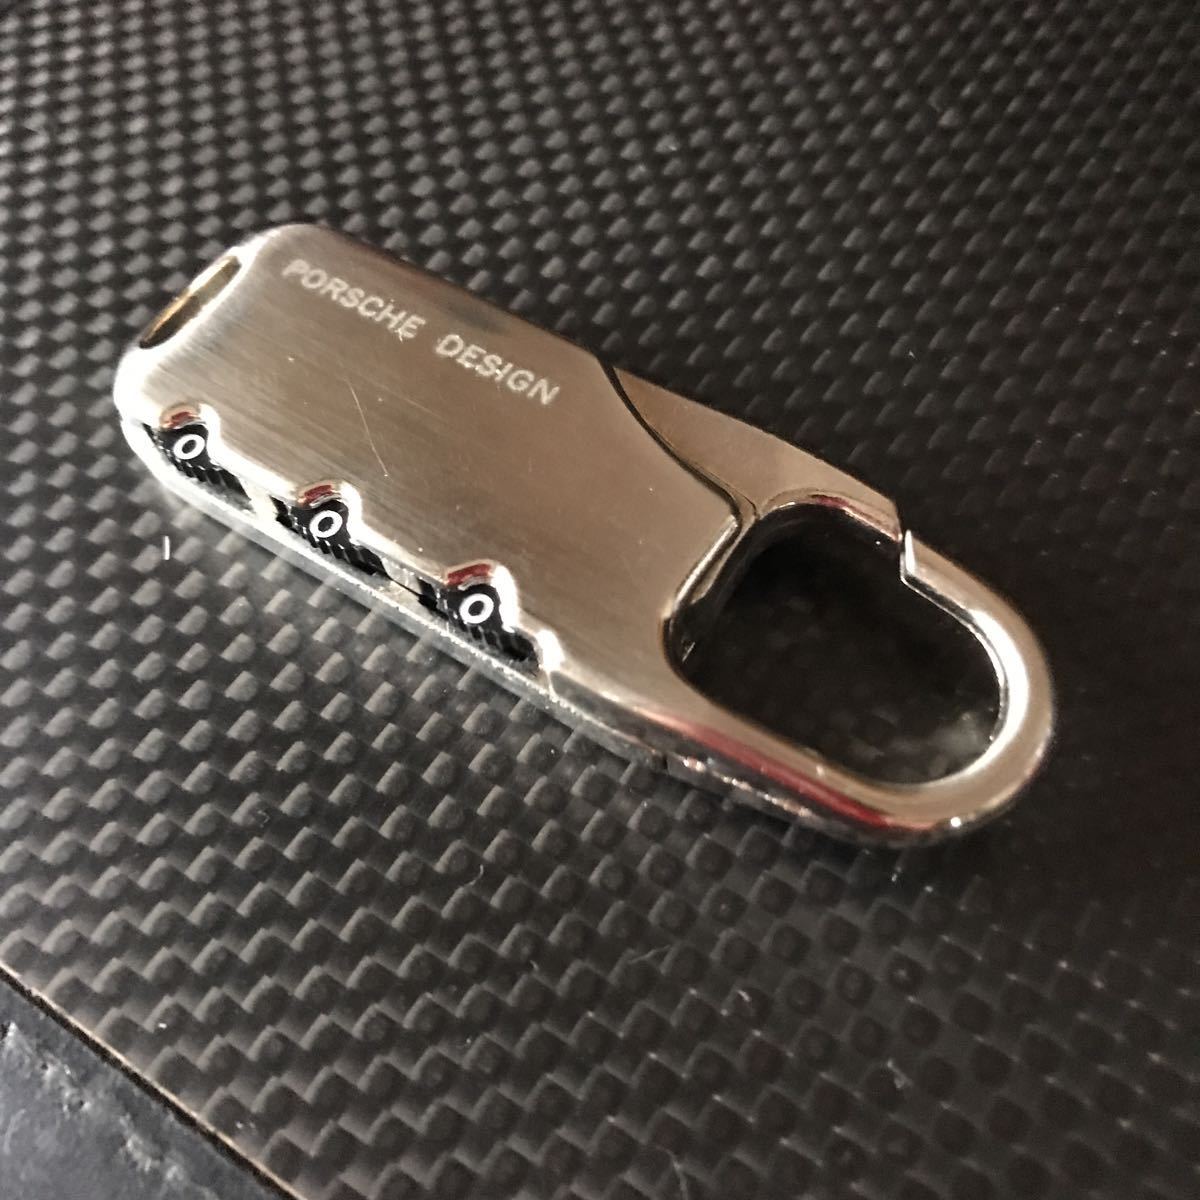  new goods / unused [PORSCH DESIGN] Porsche Design original dial lock key key silver 